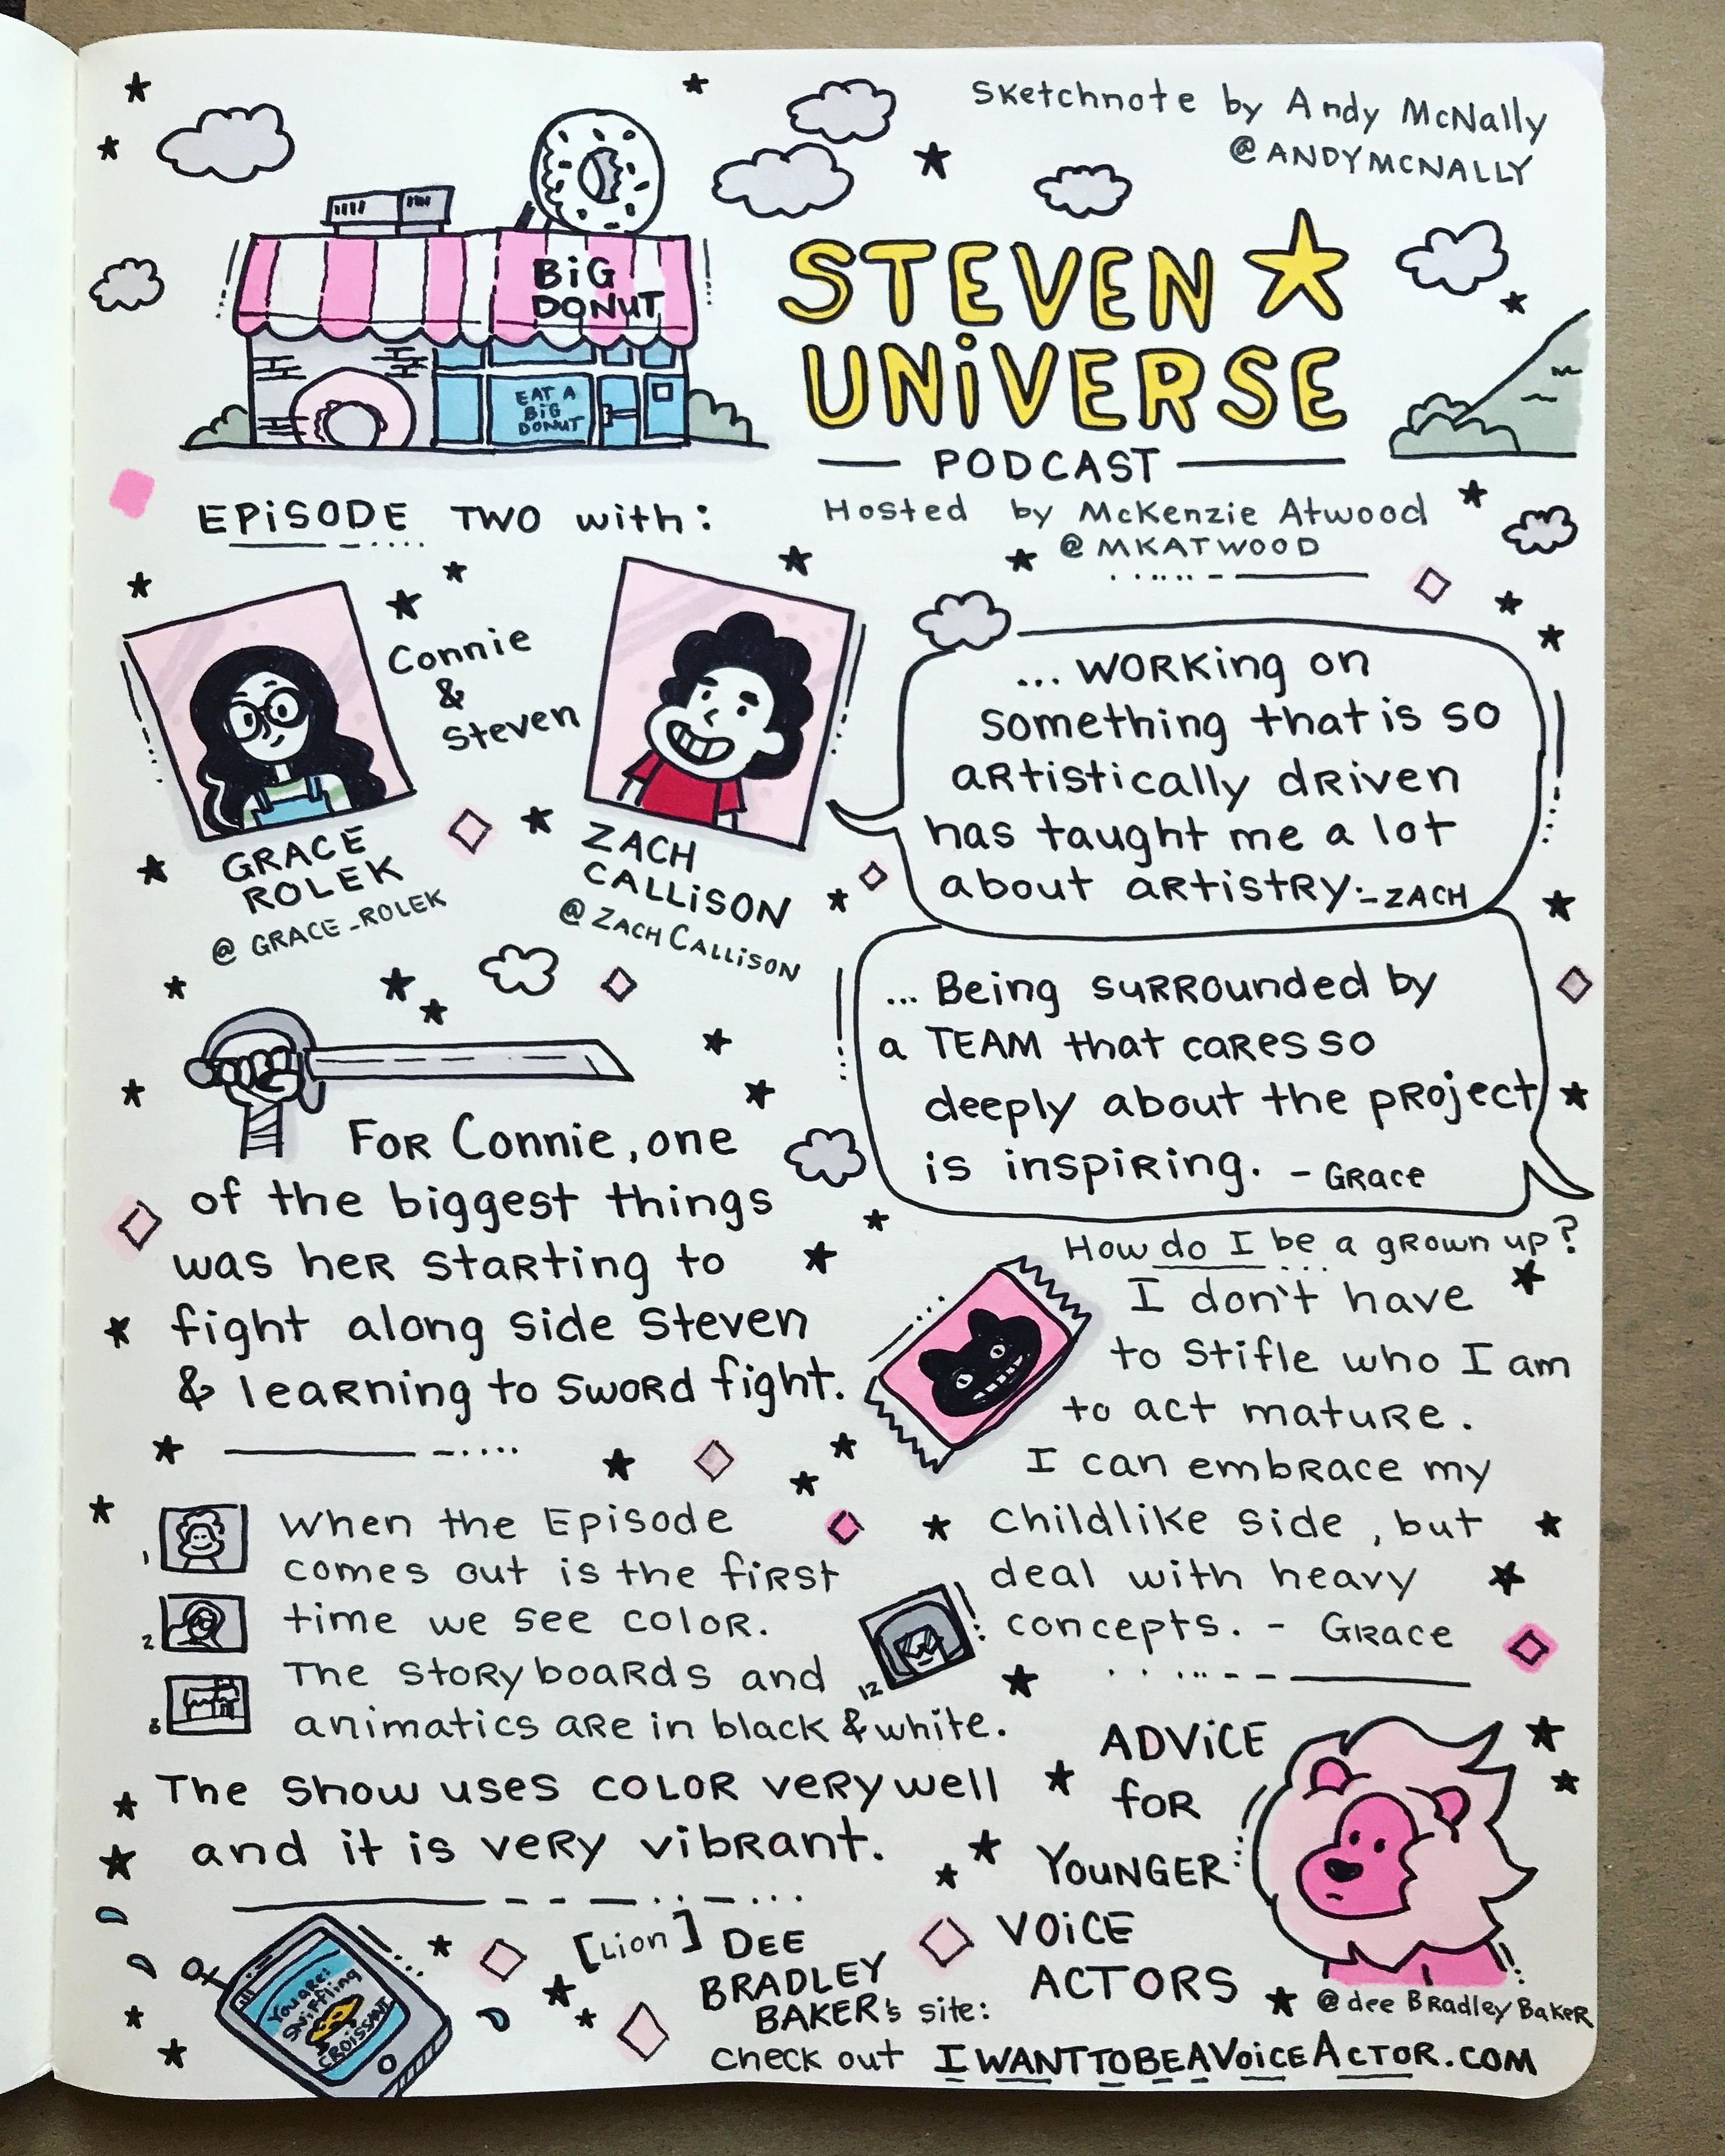 Steven Universe Podcast Episode 2 sketchnote